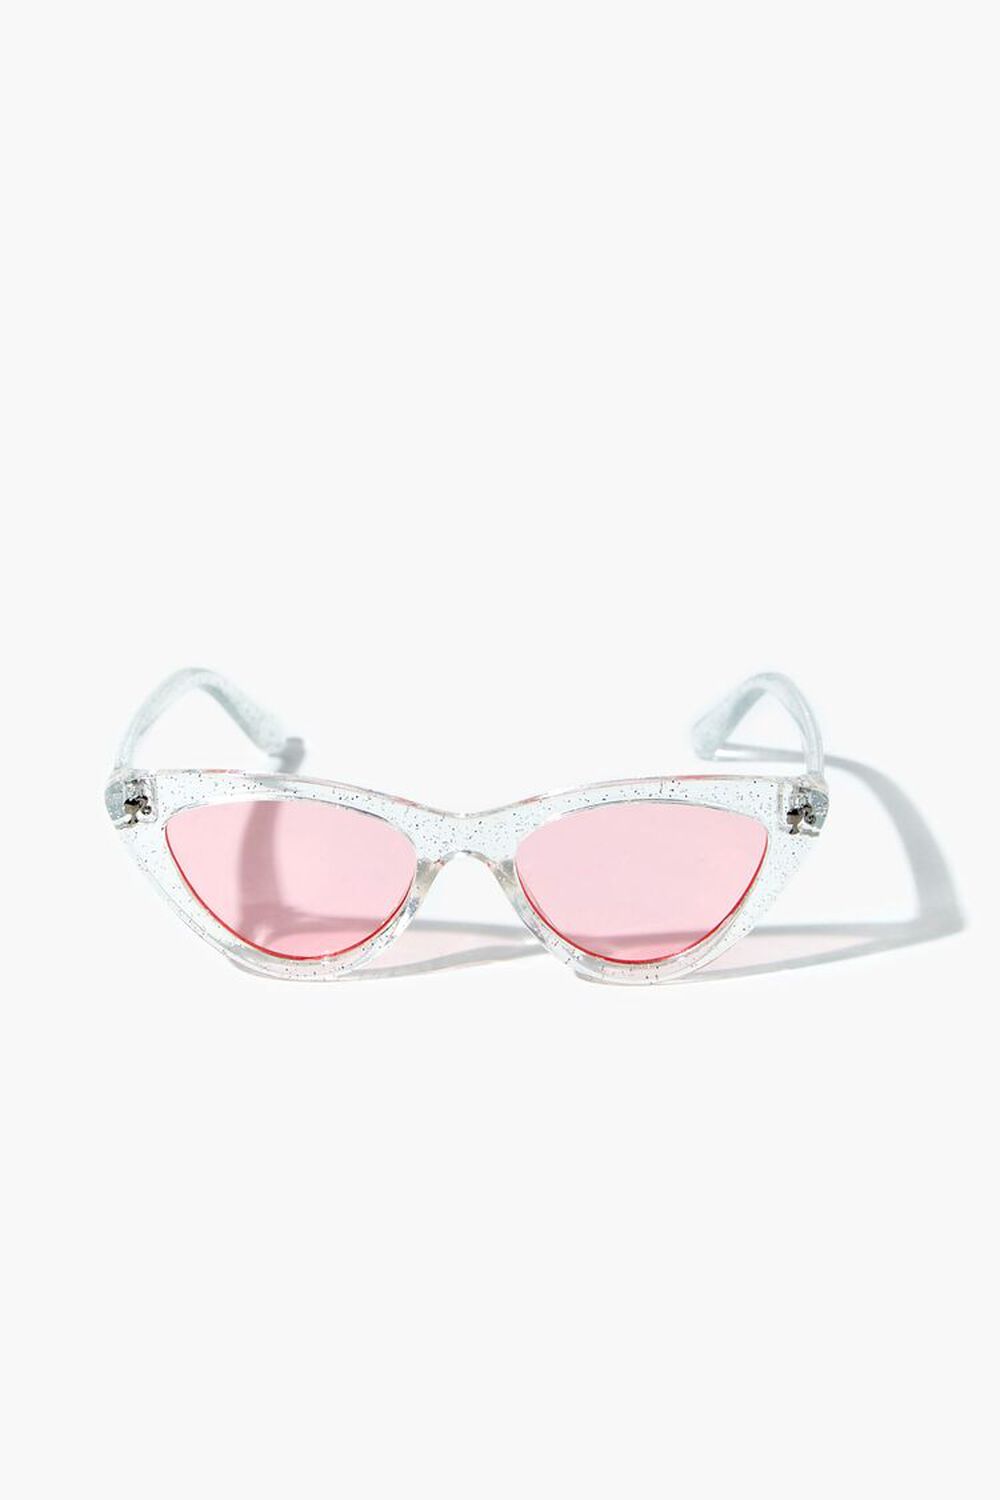 CLEAR/PINK Barbie™ Cat-Eye Sunglasses, image 1